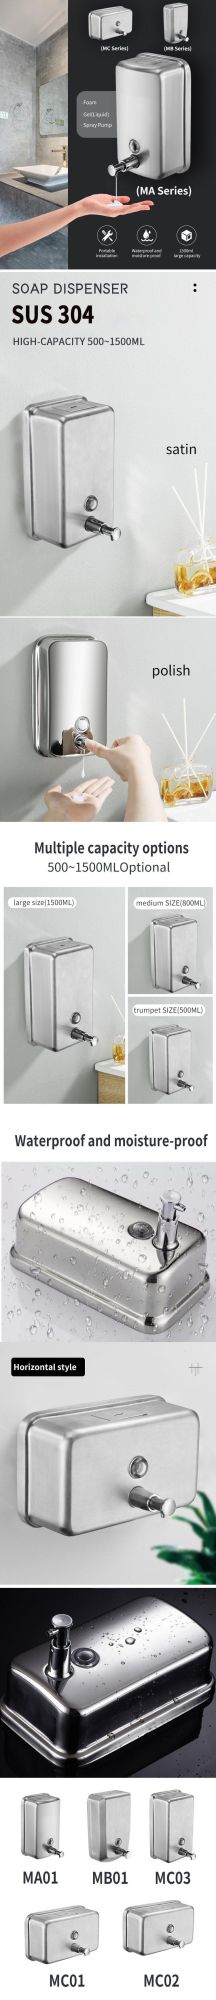 Stainless Steel Commercial Wall Mounted Soap Dispenser Pump Manual Foam Soap Dispenser